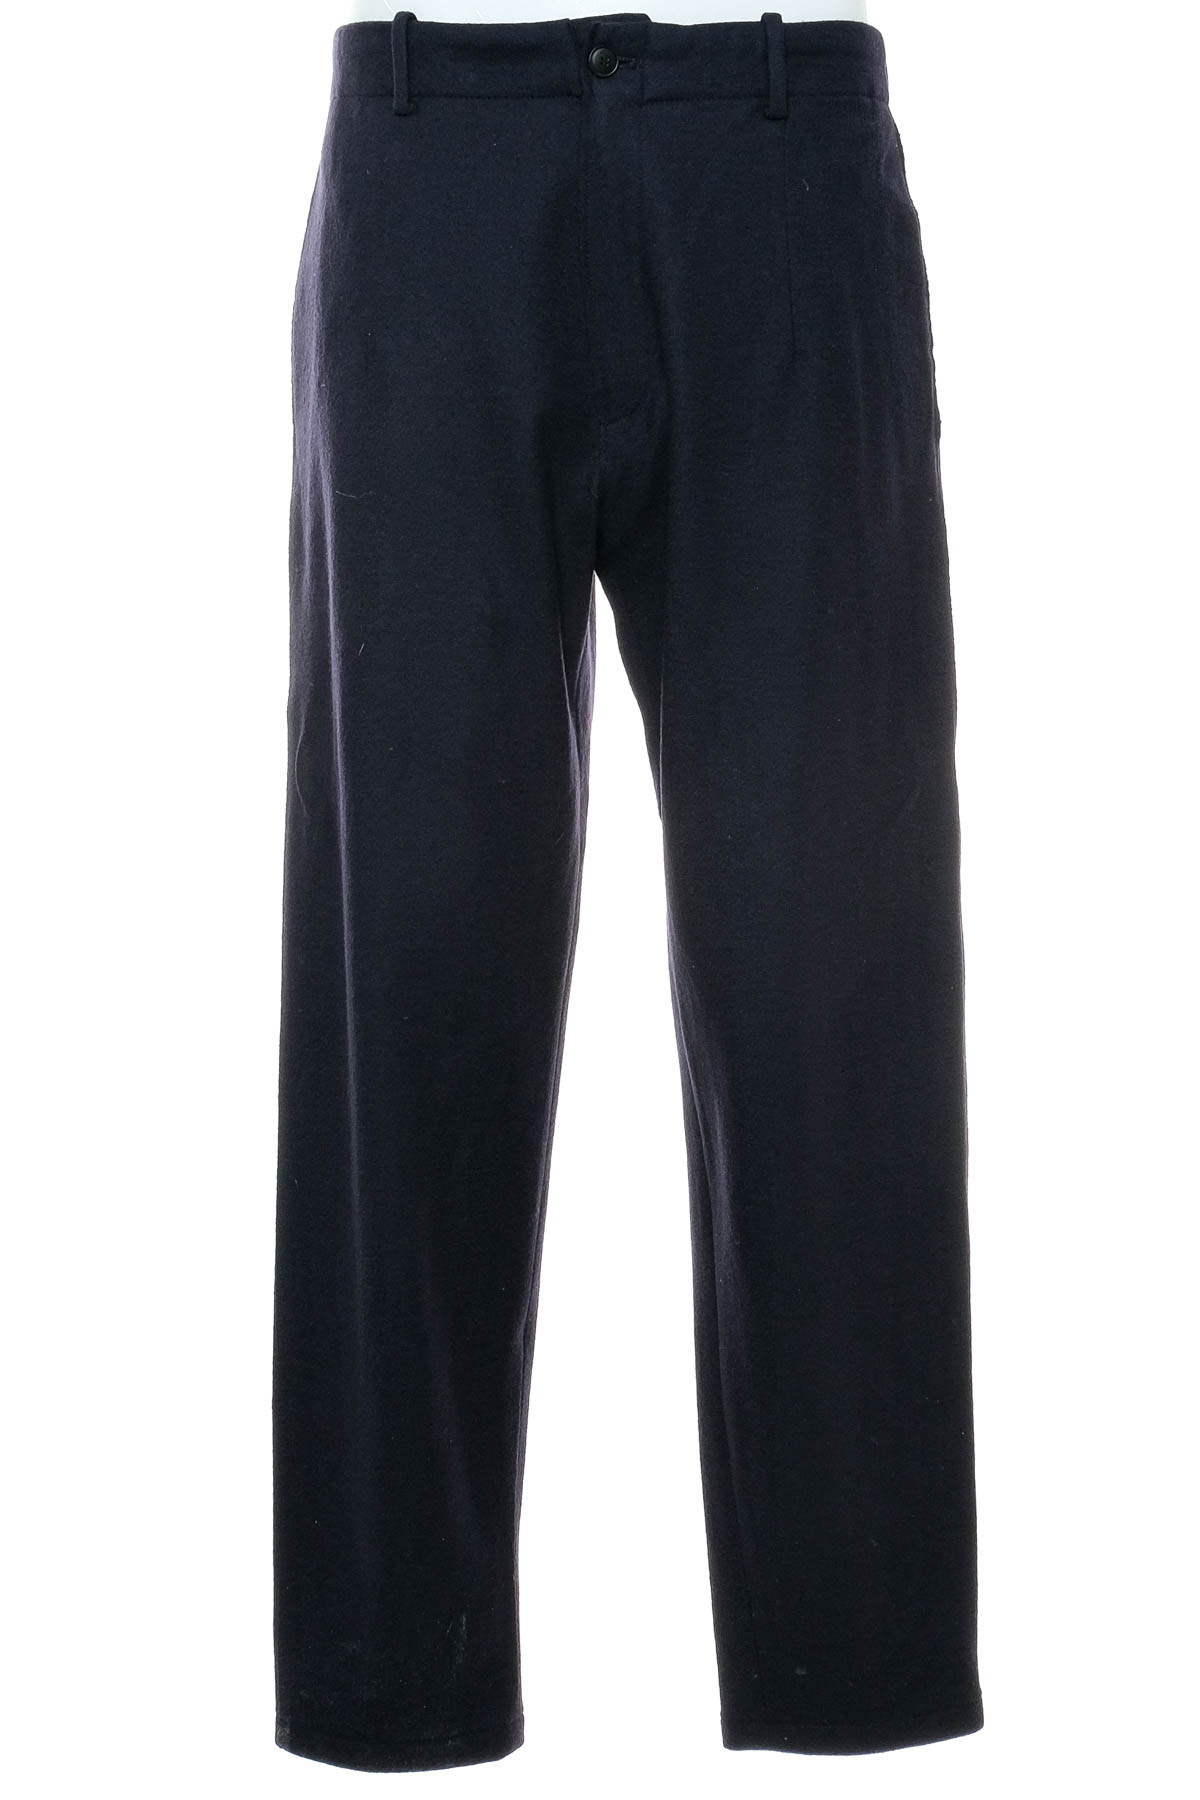 Pantalon pentru bărbați - EMPORIO ARMANI - 0